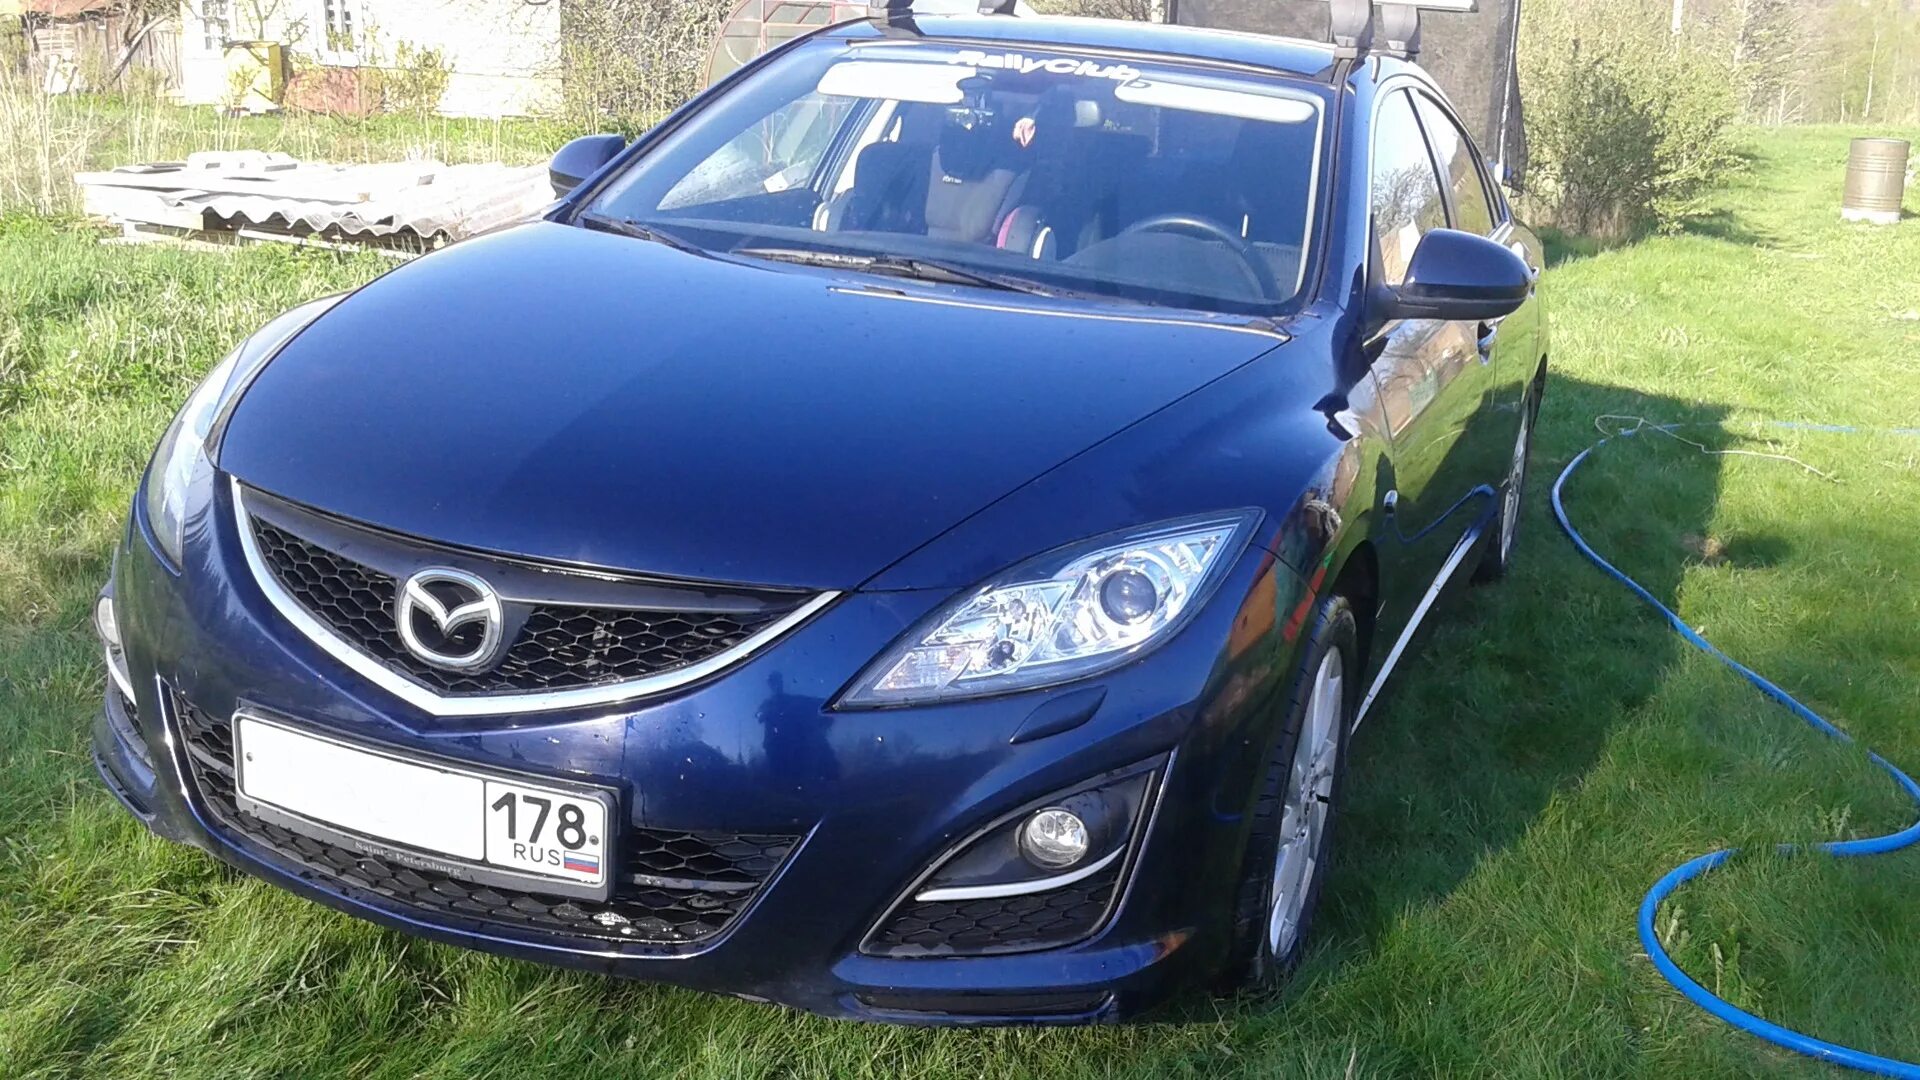 Mazda 6 Stormy Blue. Mazda 6 GH синяя. Мазда 6 JH цвет шторм Блю. Blue Stormy Mazda.